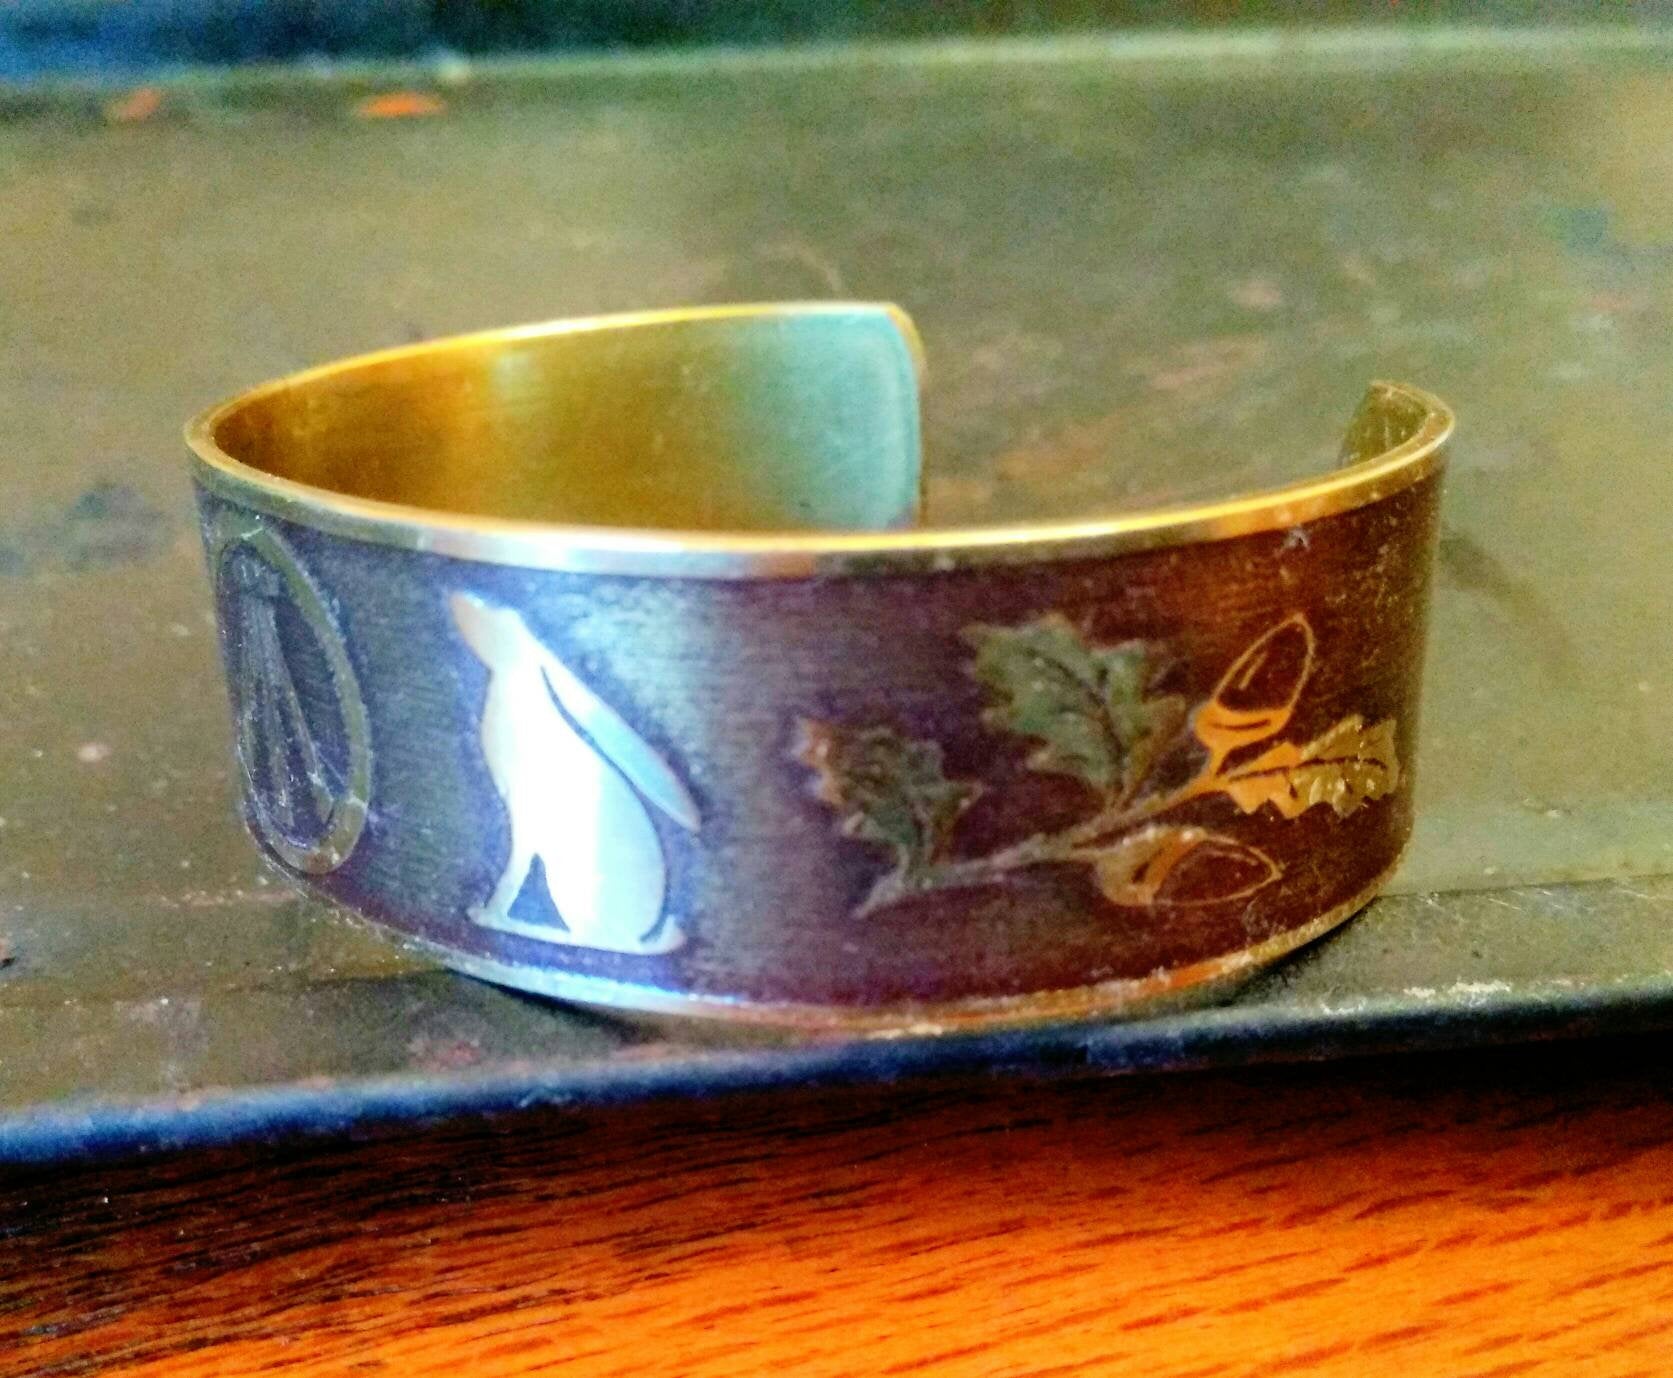 Druid Awen, Hares and Oak Leaf Garland Armband Cuff Bracelet